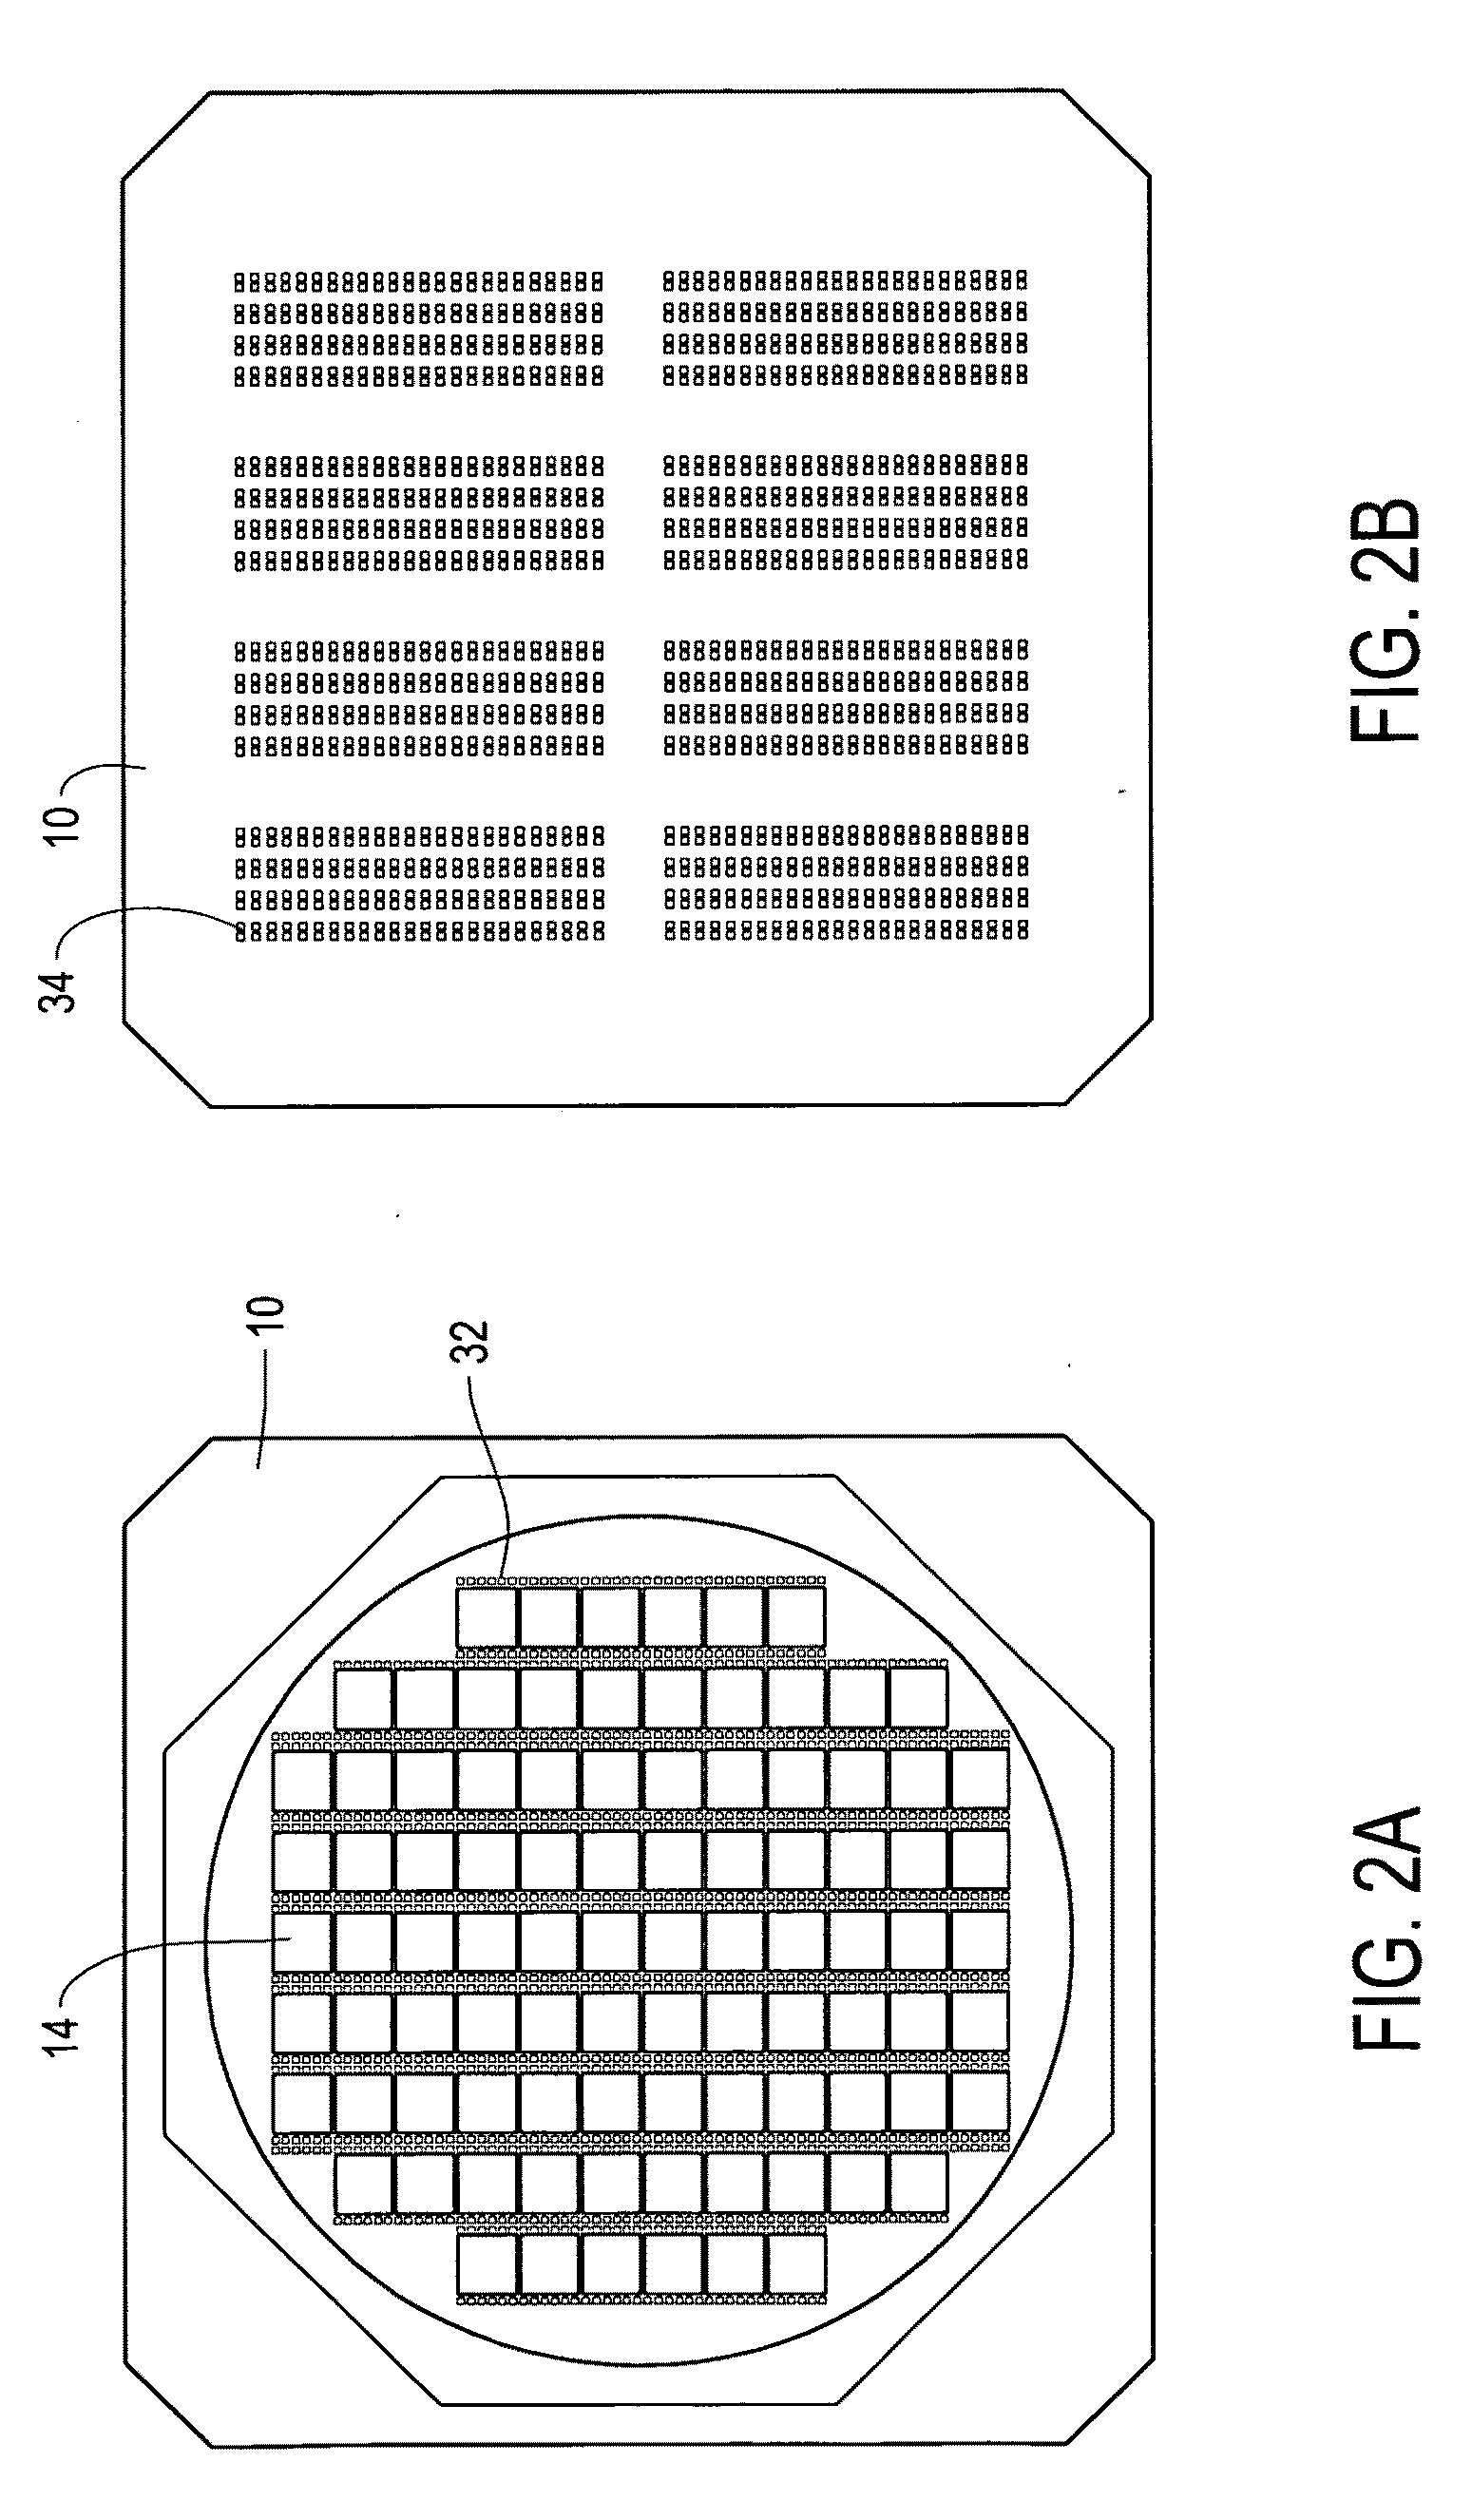 High density composite focal plane array